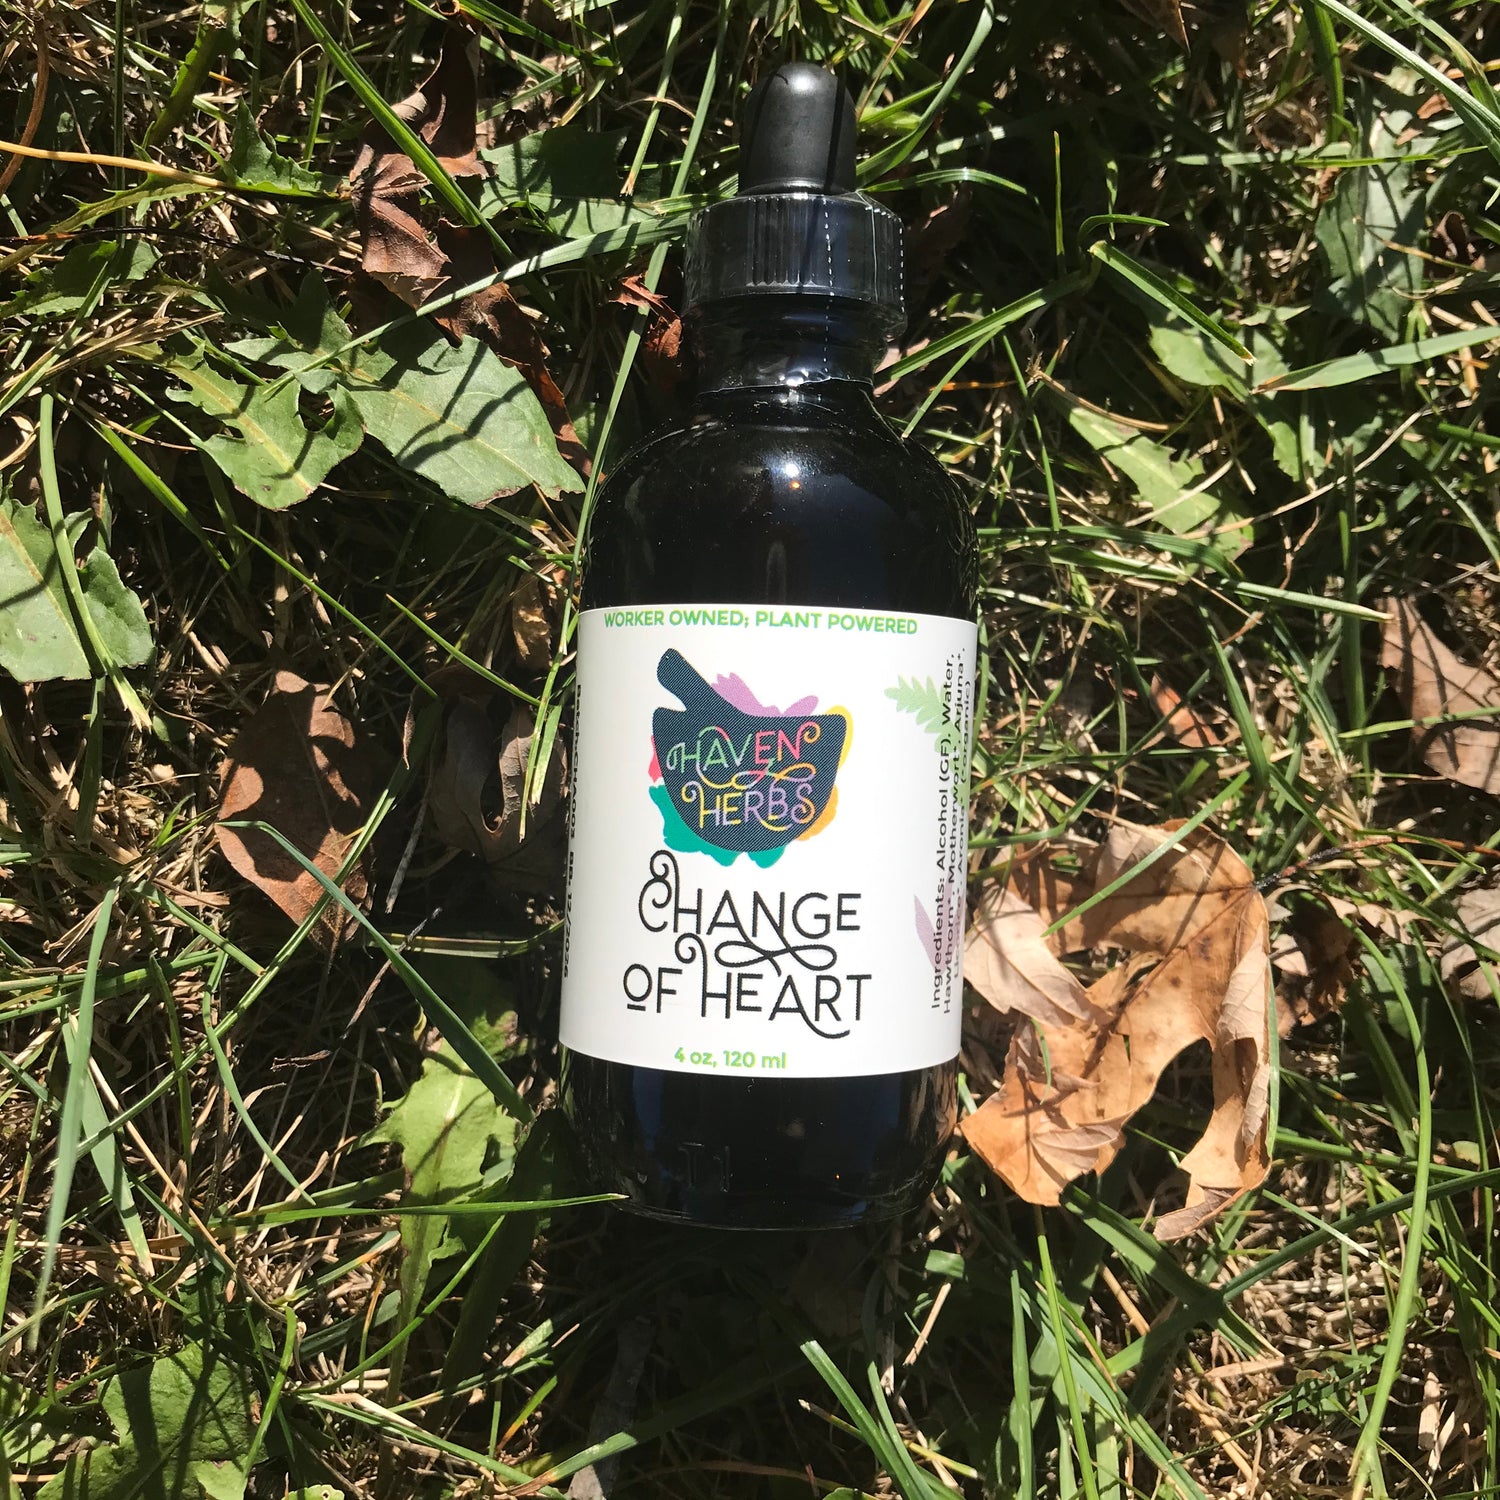 4 oz bottle named Change of Heart on a grassy background